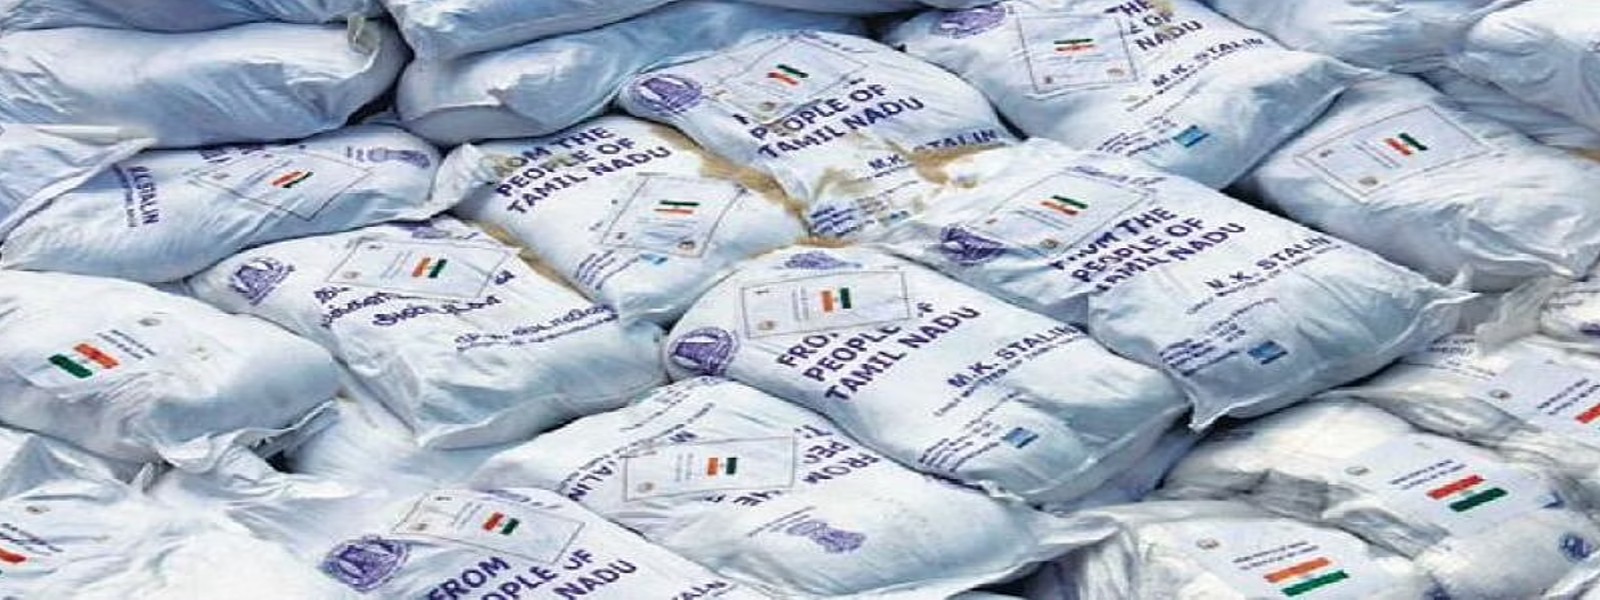 Tamil Nadu sends second aid shipment